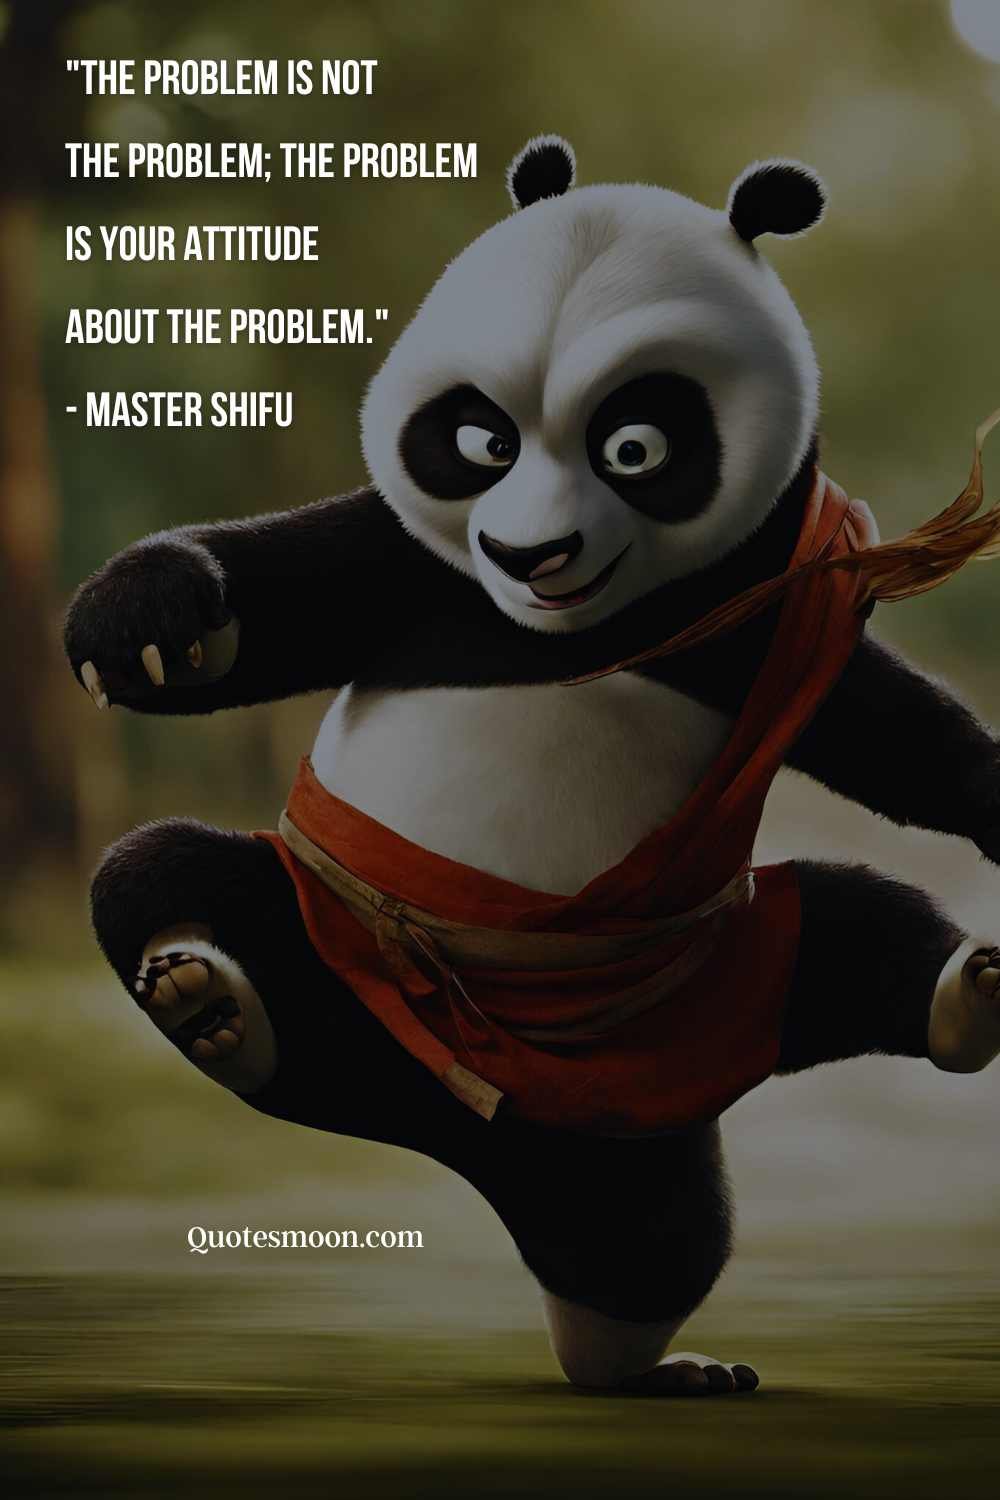 
Kung fu panda quotes past present future love image new